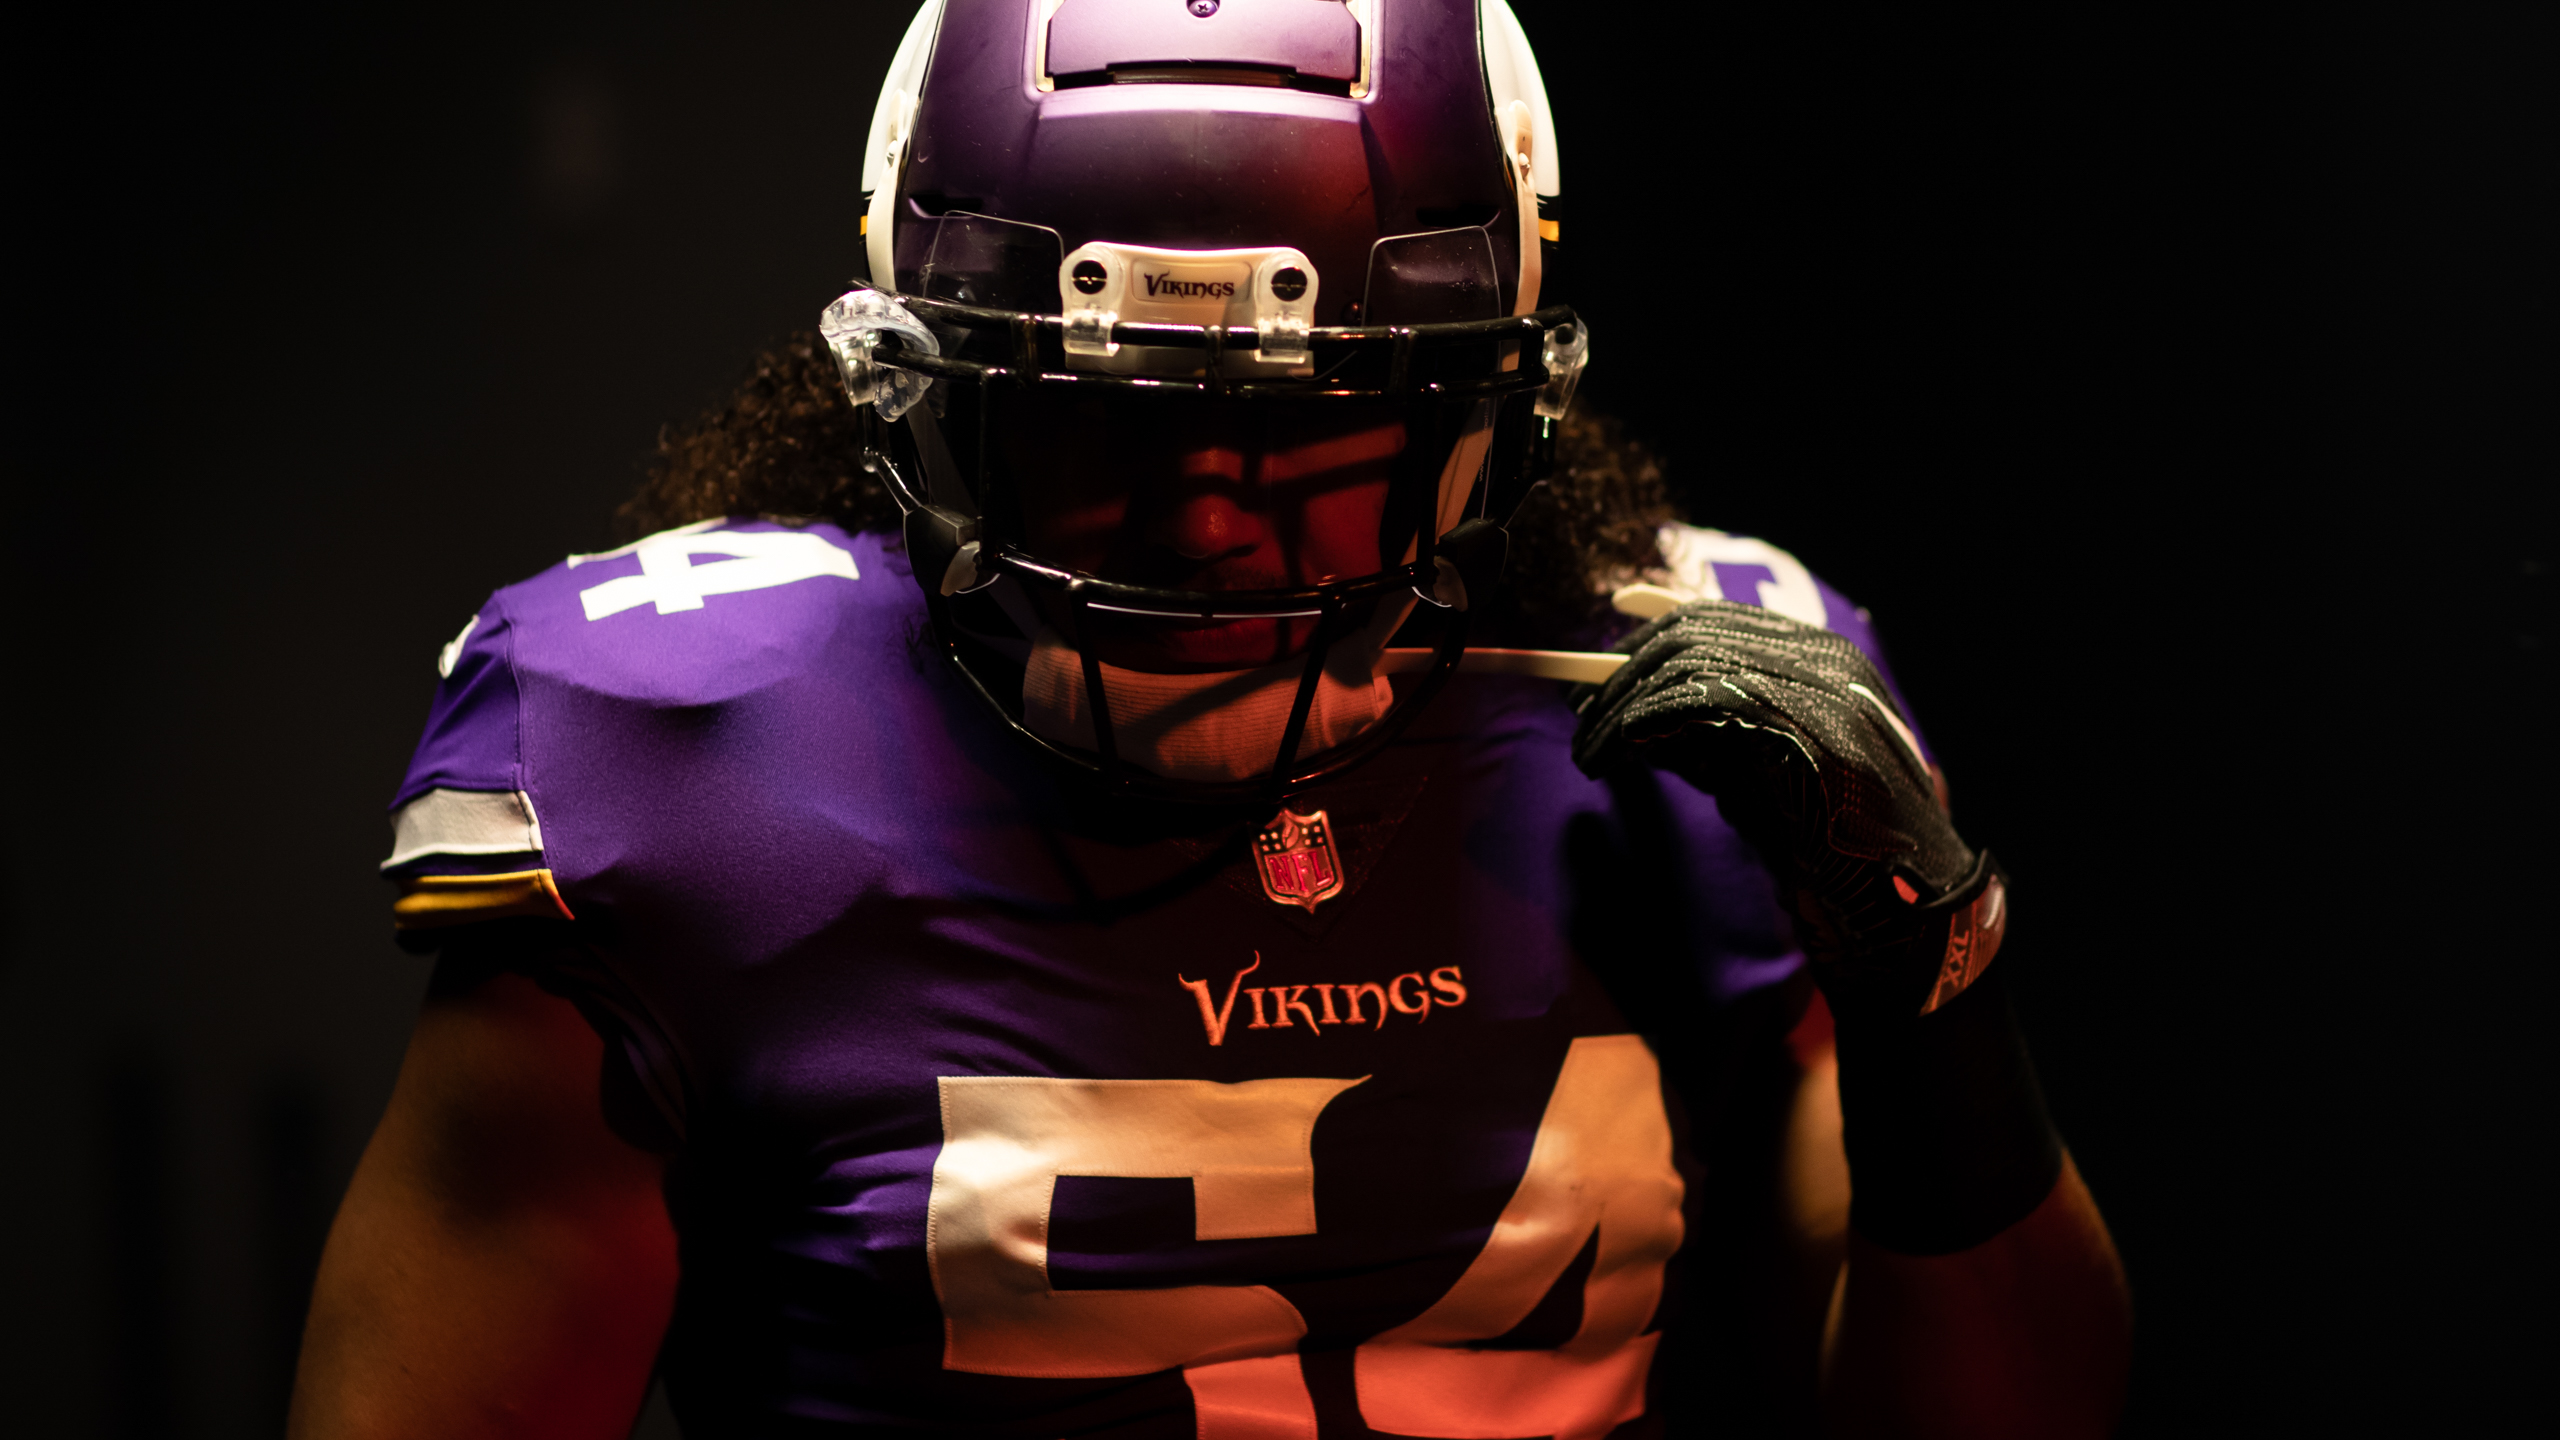 Minnesota Vikings , HD Wallpaper & Backgrounds